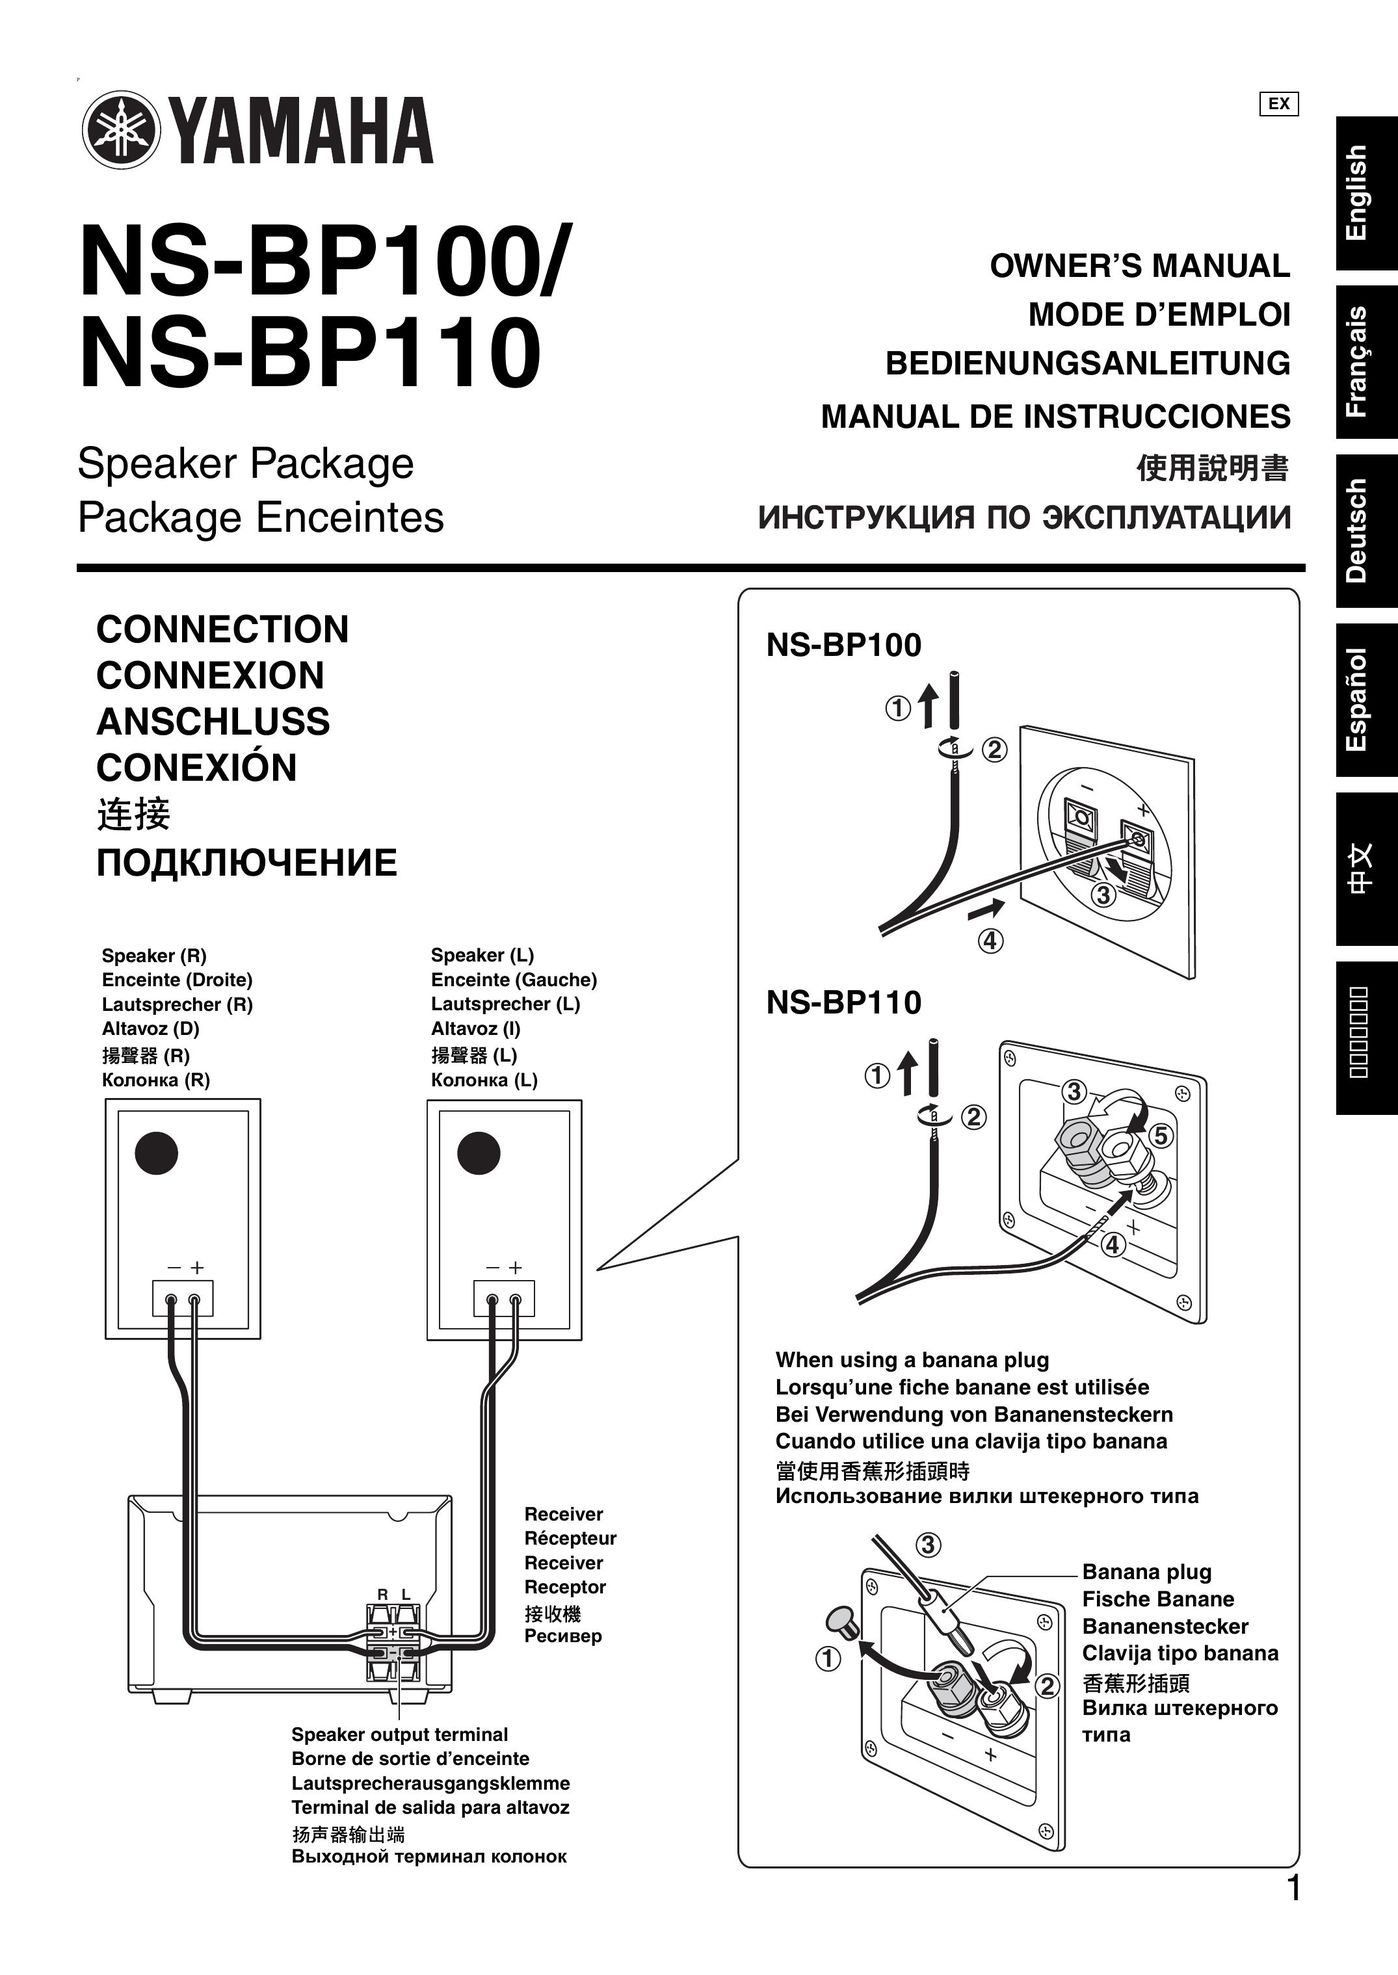 Yamaha NS-BP100 Speaker System User Manual